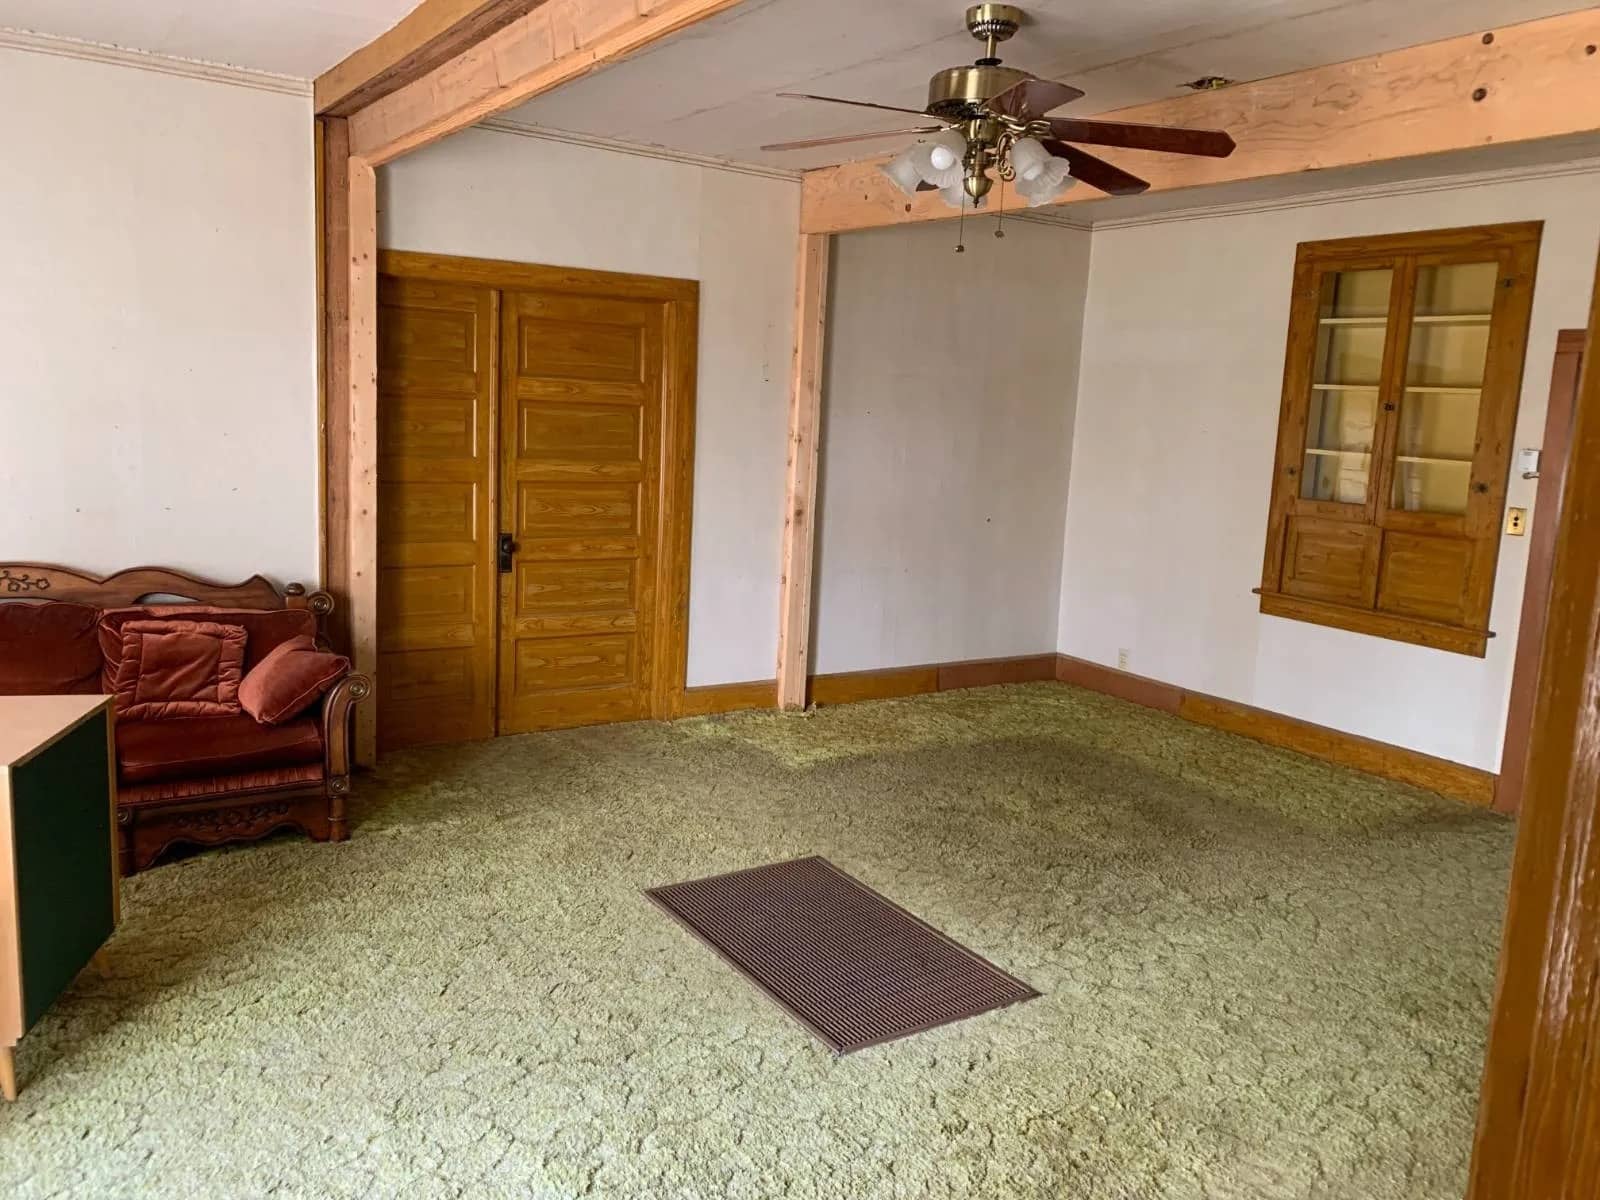 A 5-Bedroom C. 1900 Kansas Farmhouse For Sale On 5 Acres Under $101,000 - 153